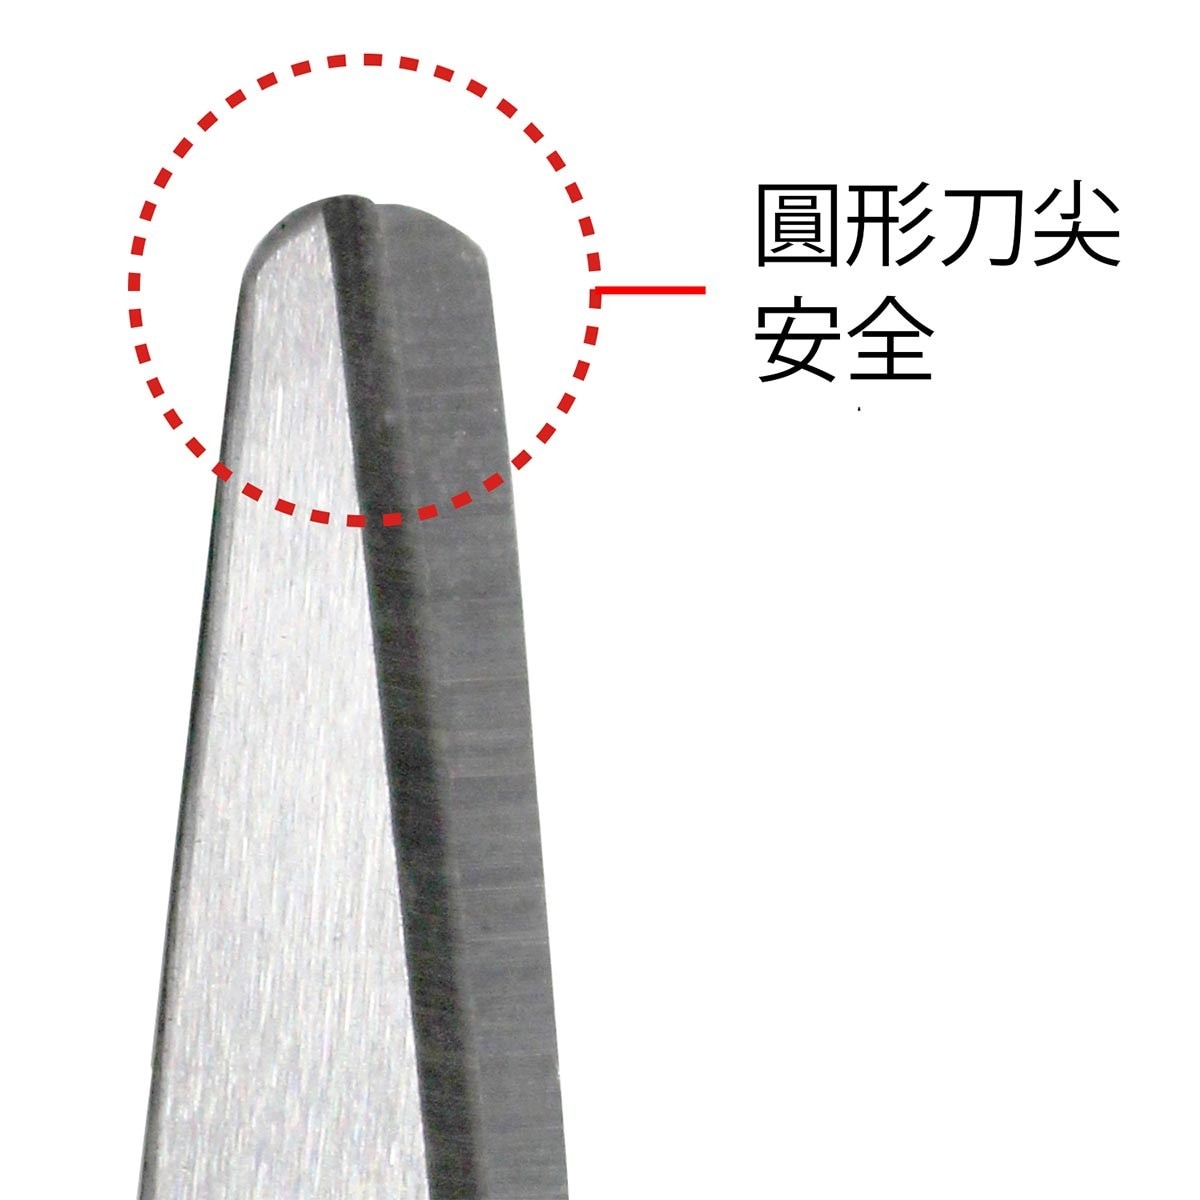 PLUS 不銹鋼剪刀時尚新穎外型設計、握柄柔軟舒適。斜角刀刃，降低摩擦力，省力好剪。軸心POM特殊材質，防止刀刃鬆弛晃動。